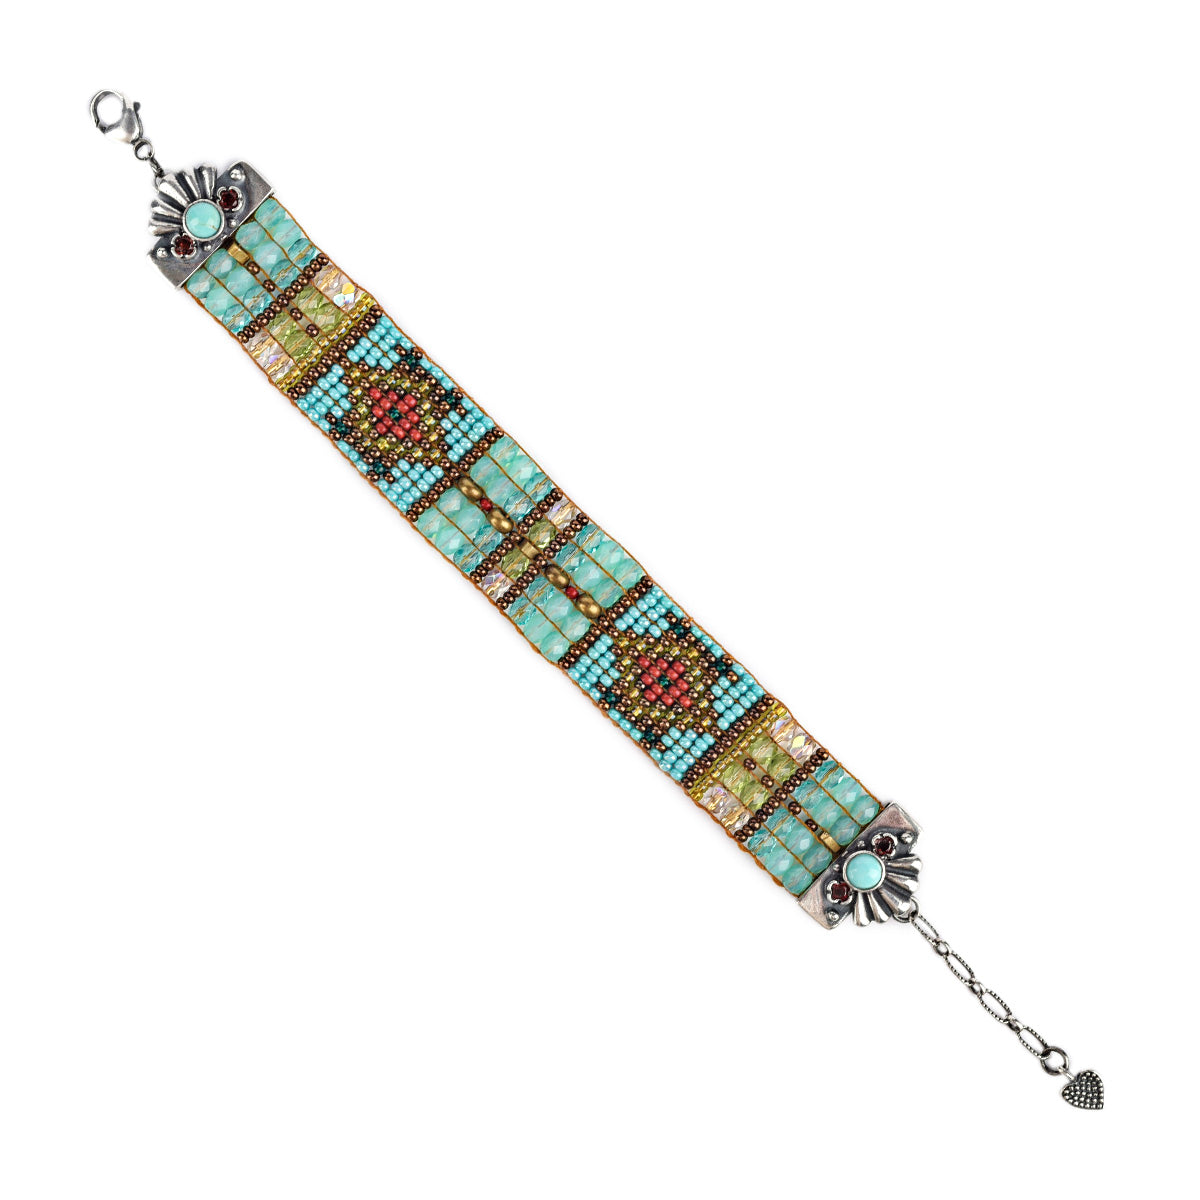 Chili Rose Beaded Bracelet with Inlaid Turquoise